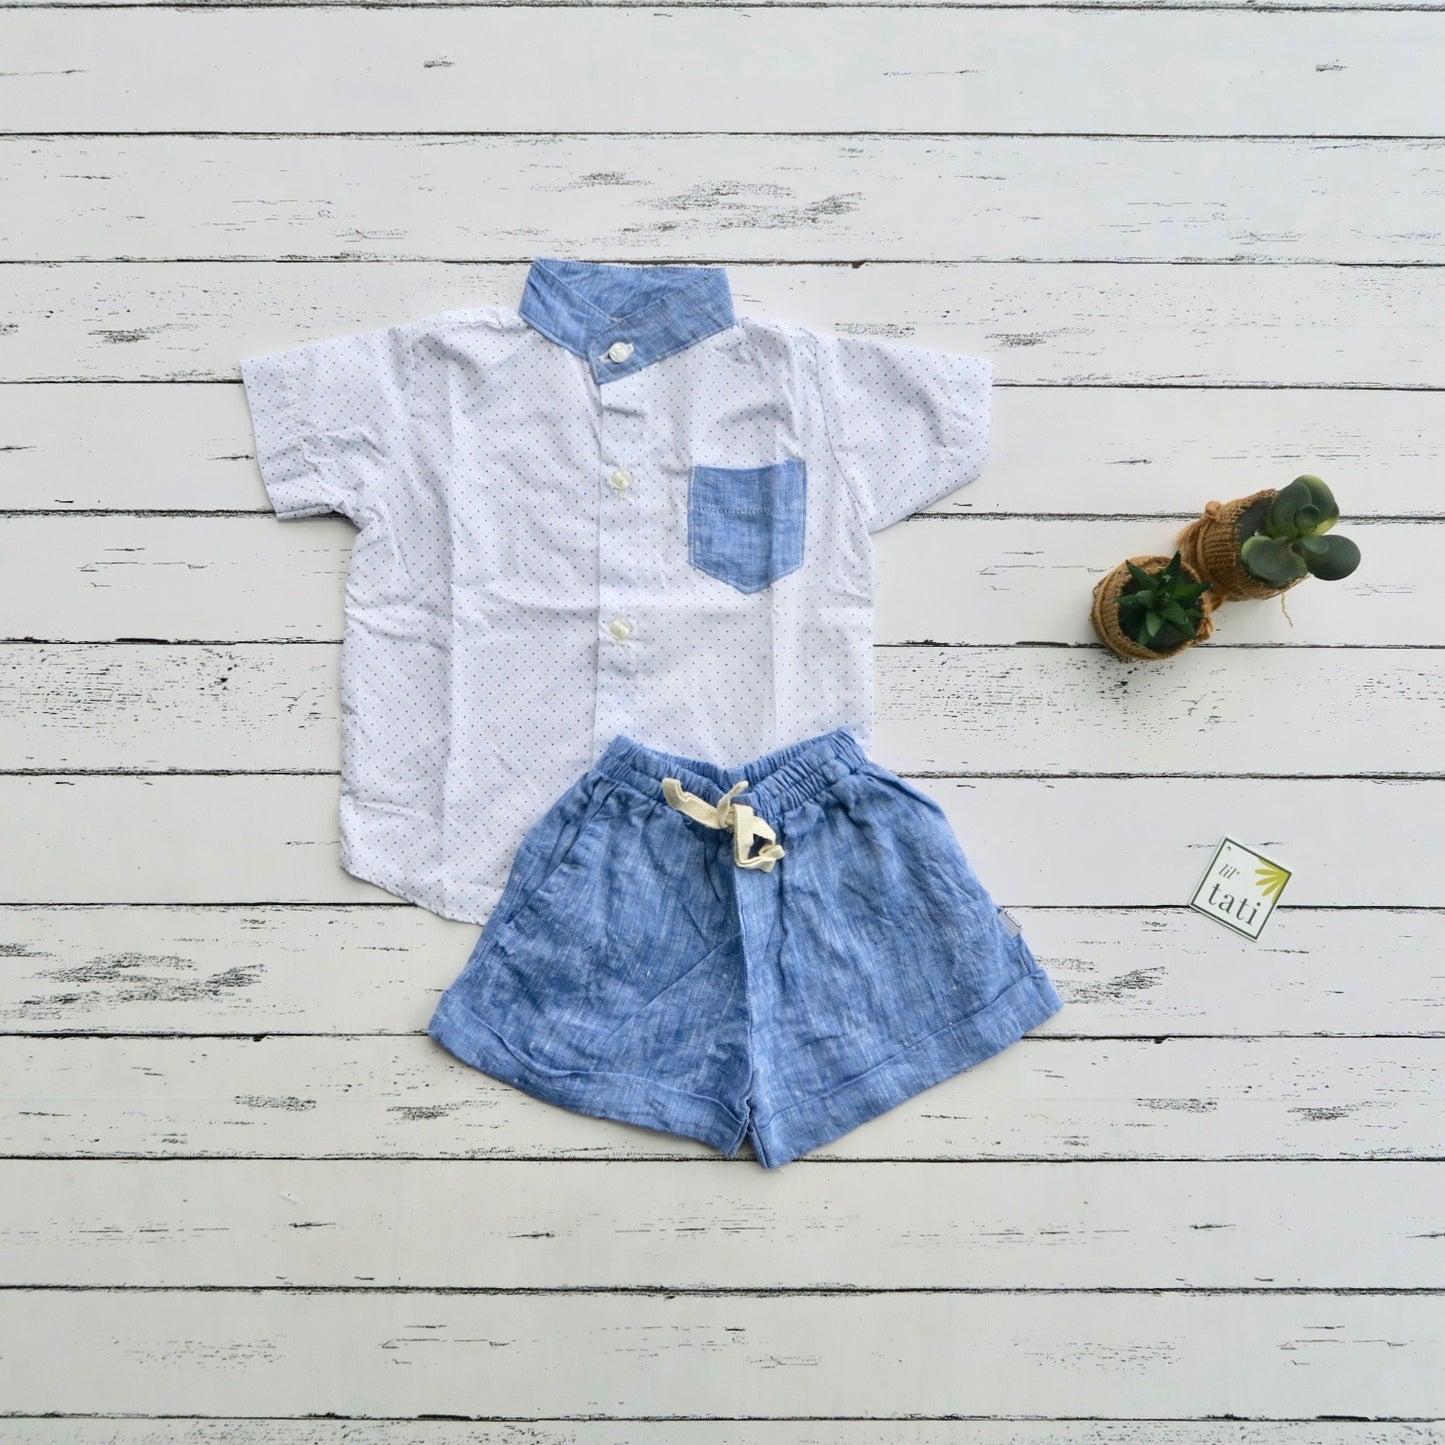 Cedar Top & Shorts in Mini Squares and Bright Blue Linen